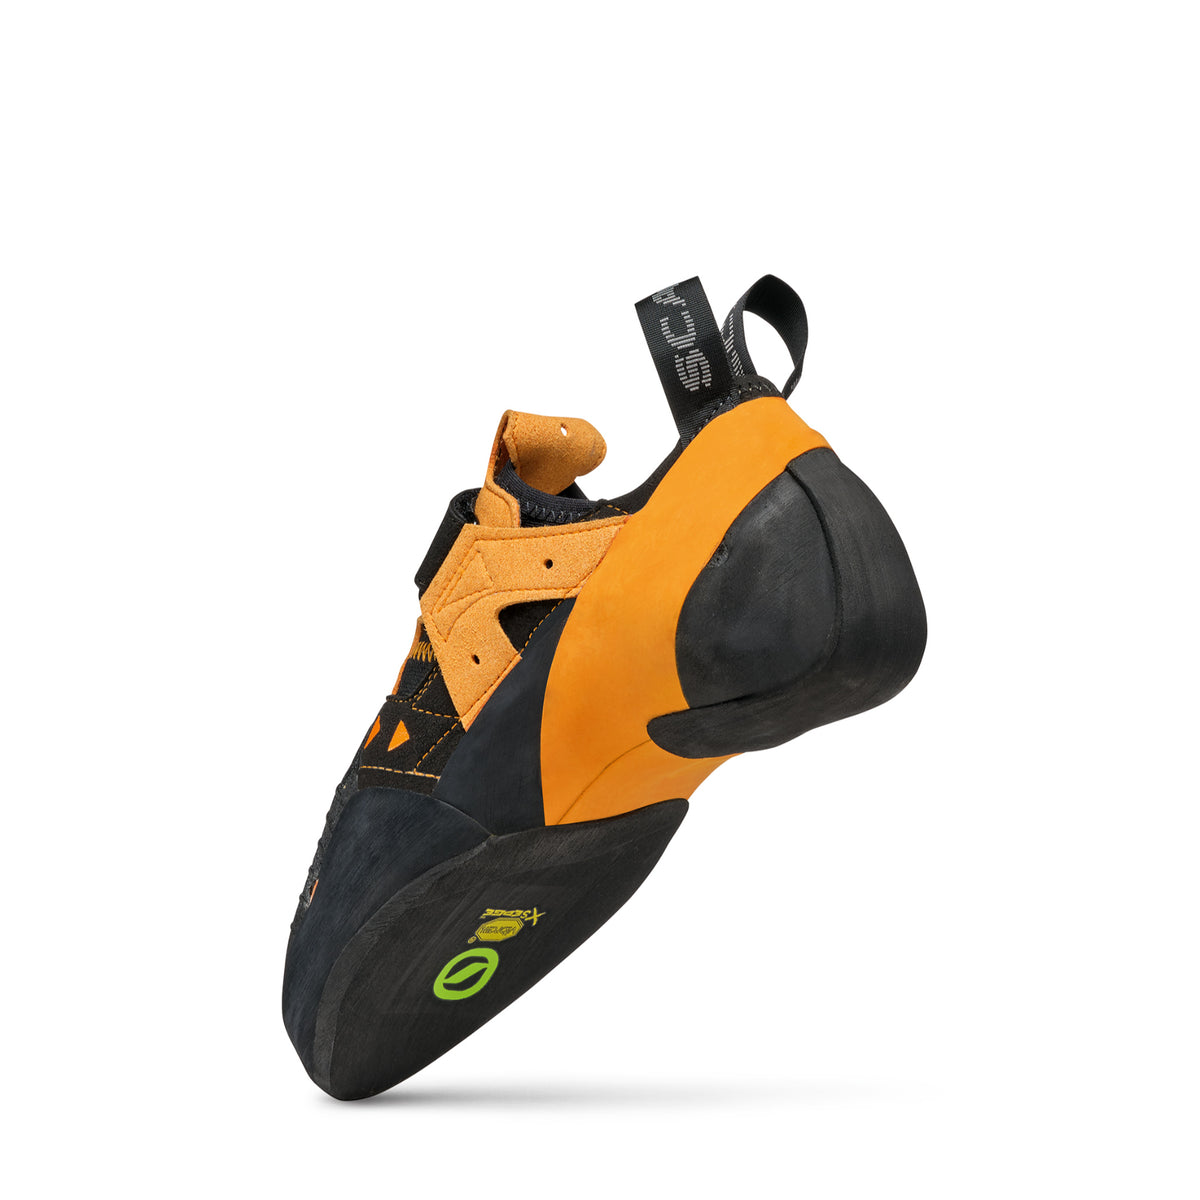 Scarpa Instinct VS climbing shoe in black/orange. rear view